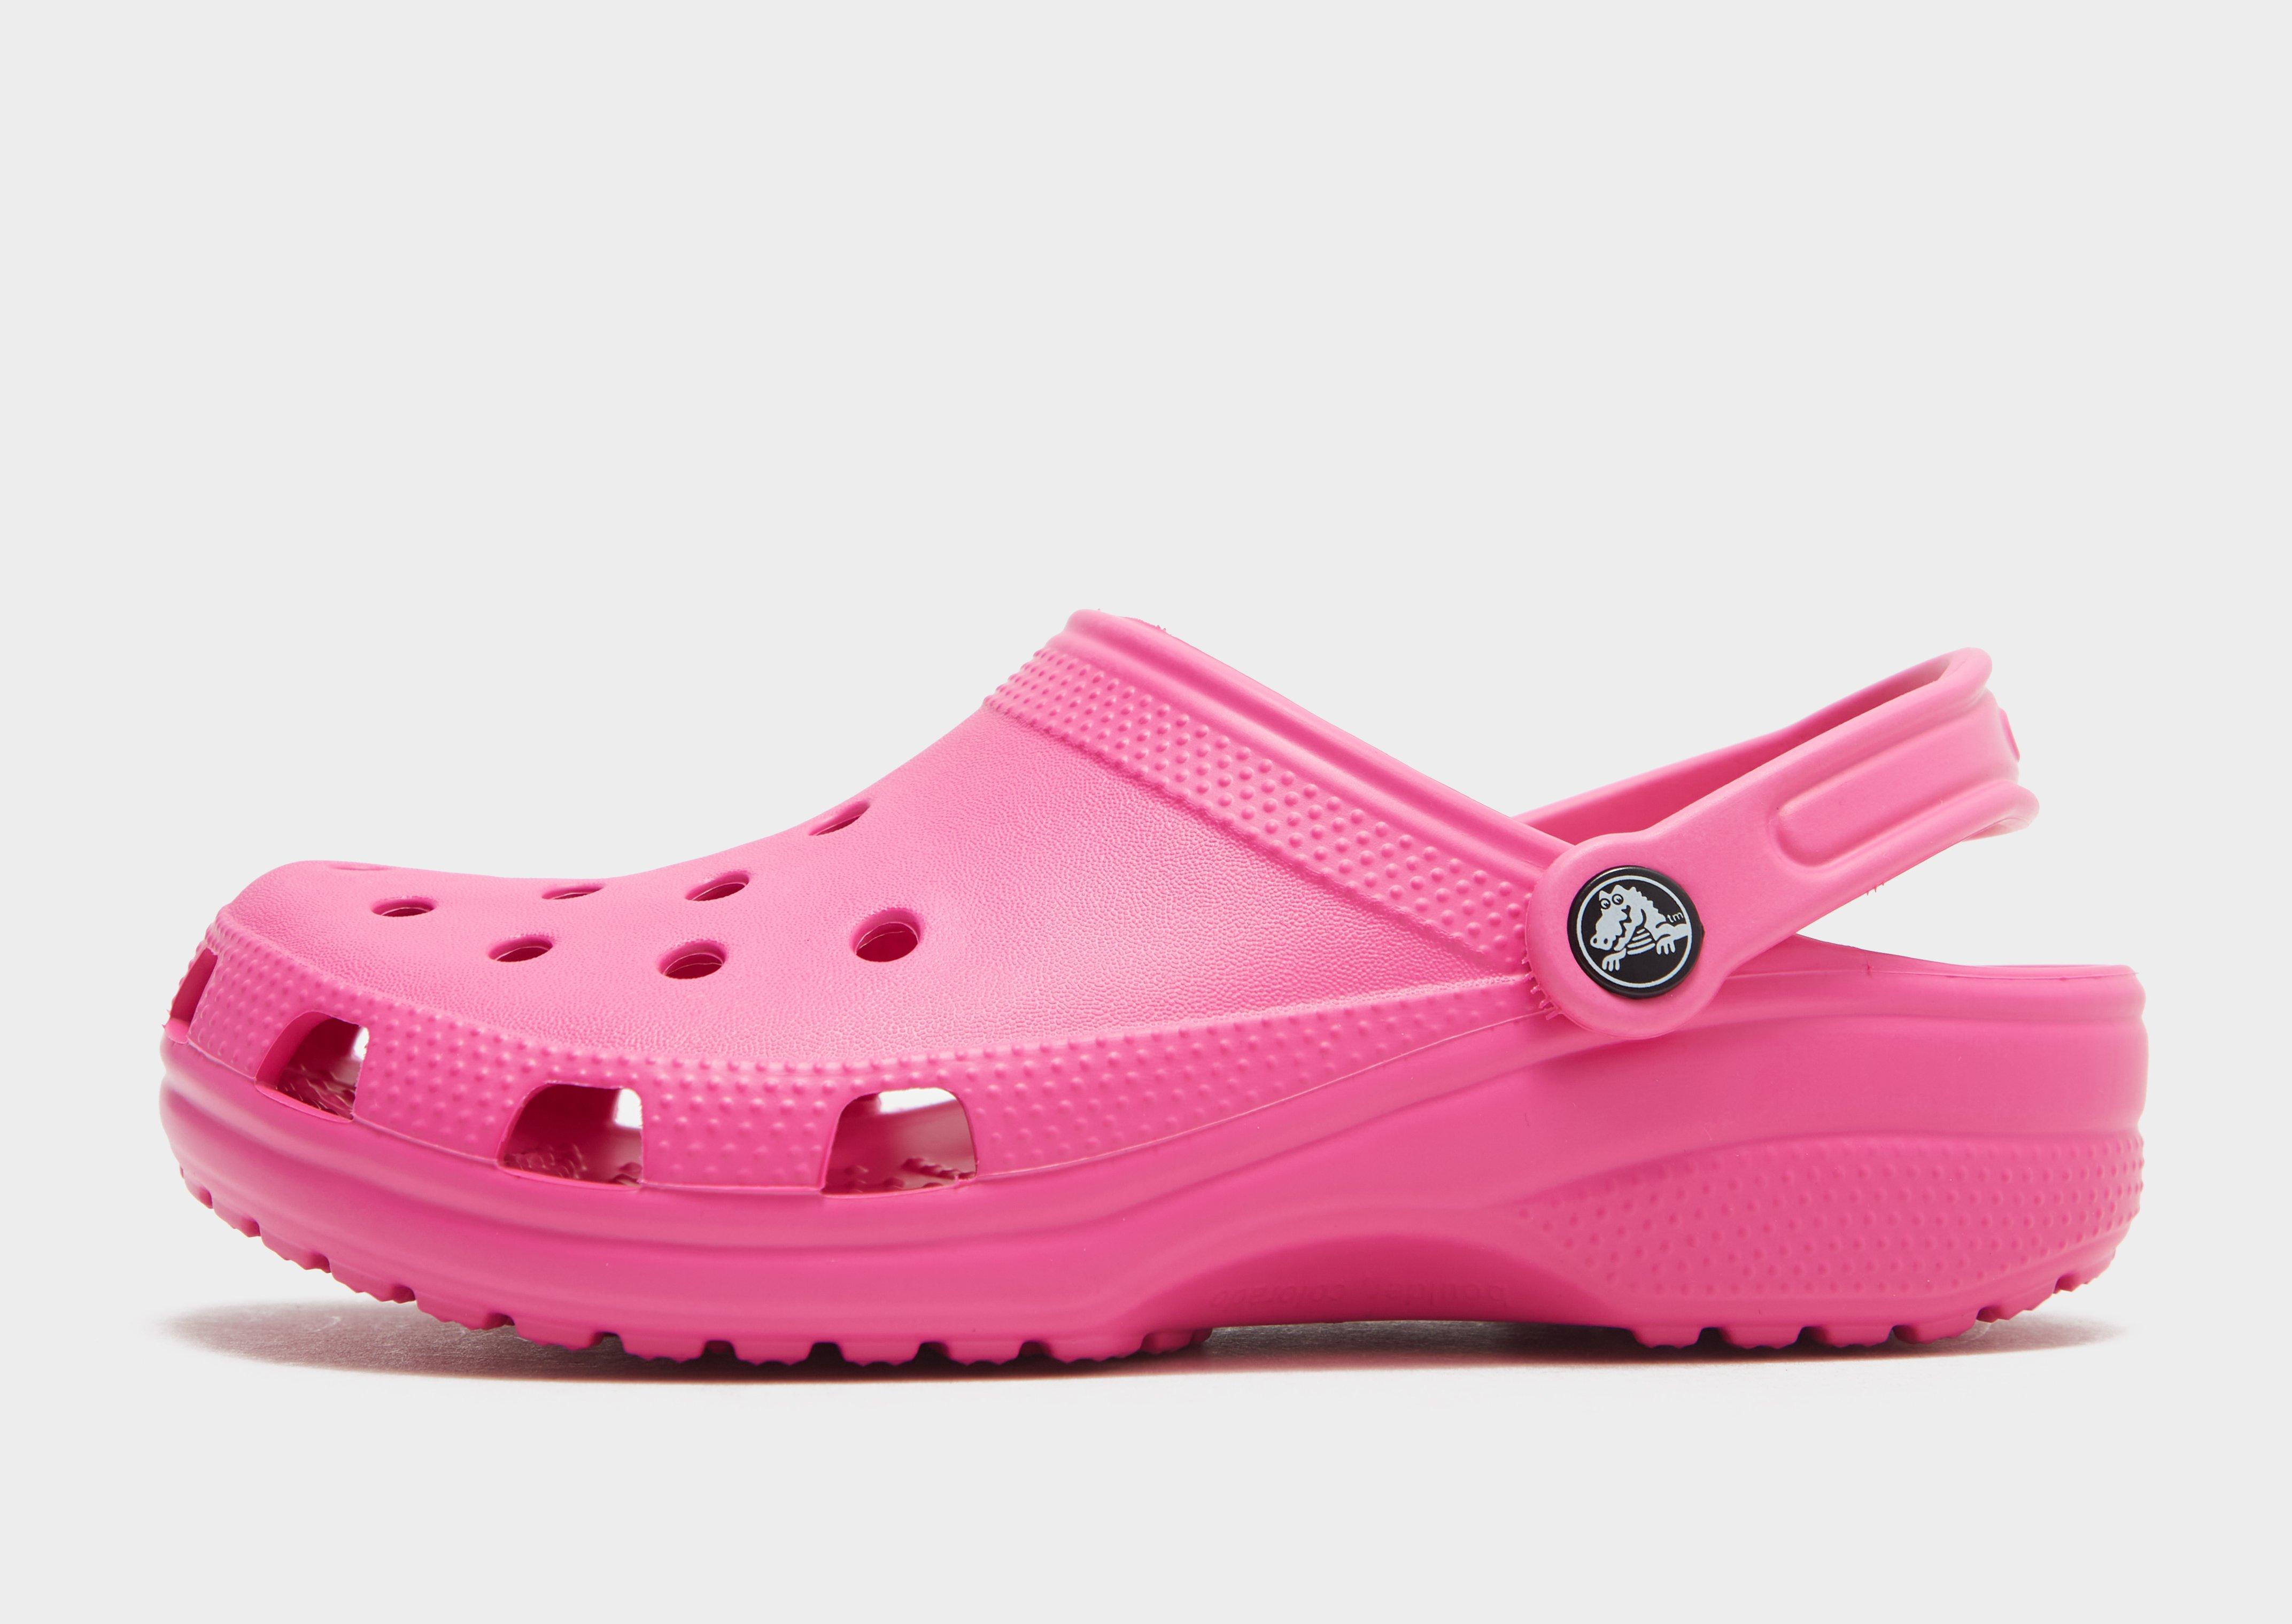 Dripping jungle udskiftelig Pink Crocs Classic Clog Dame - JD Sports Danmark